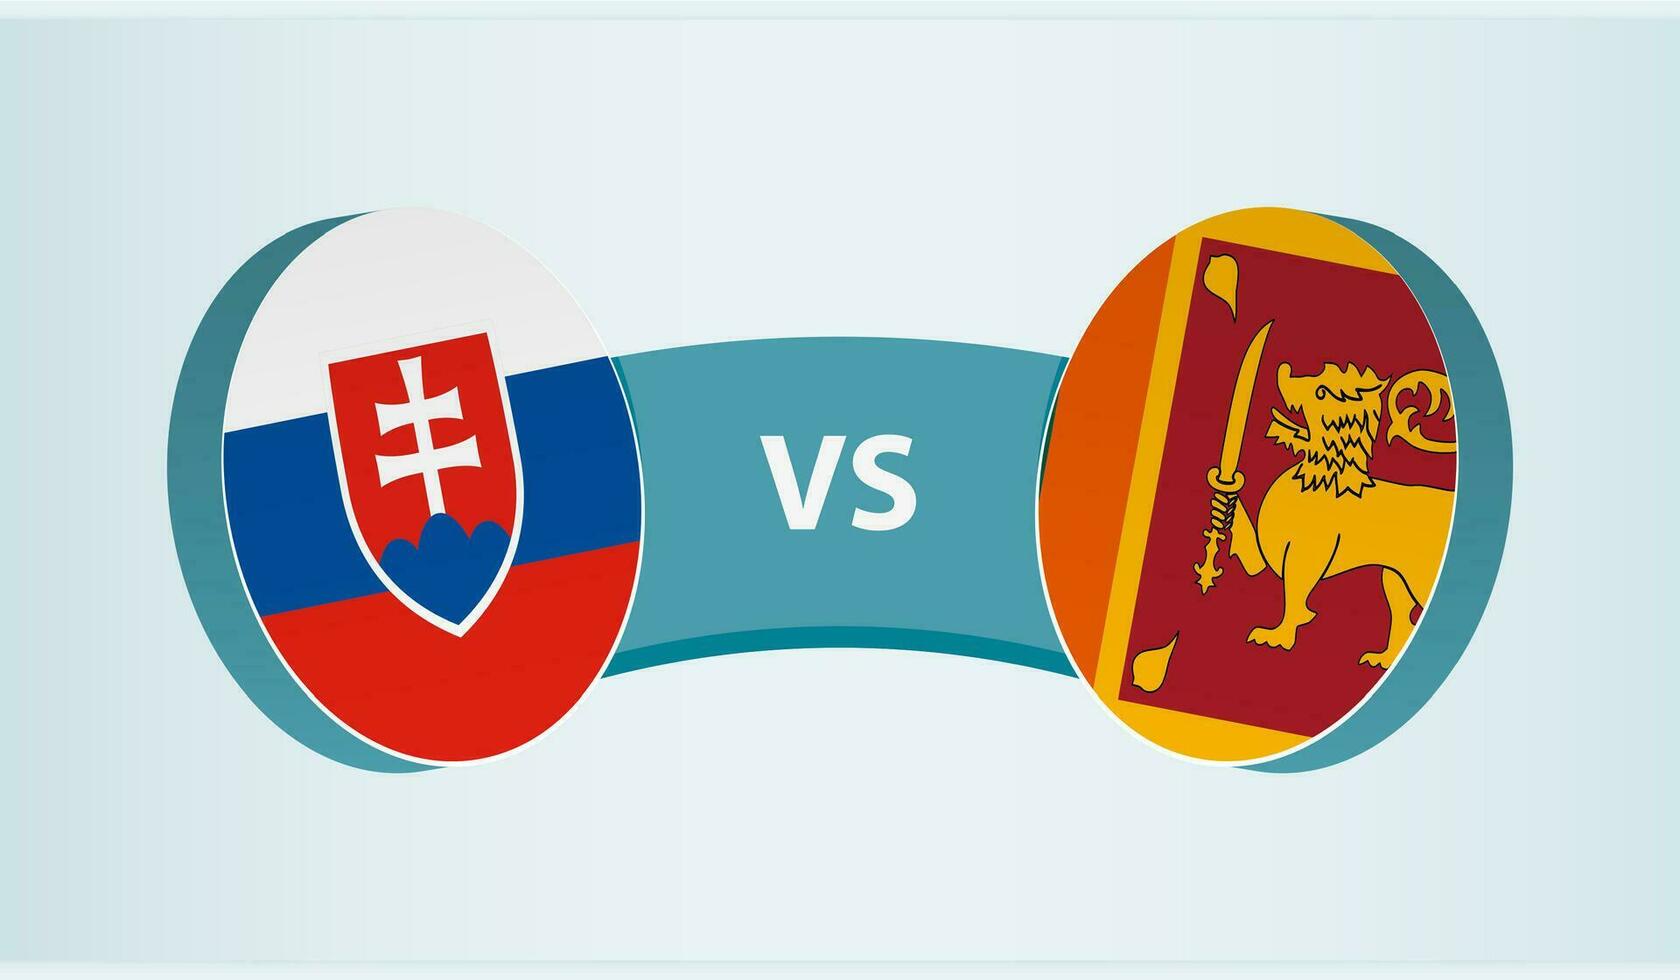 Slovakia versus Sri Lanka, team sports competition concept. vector